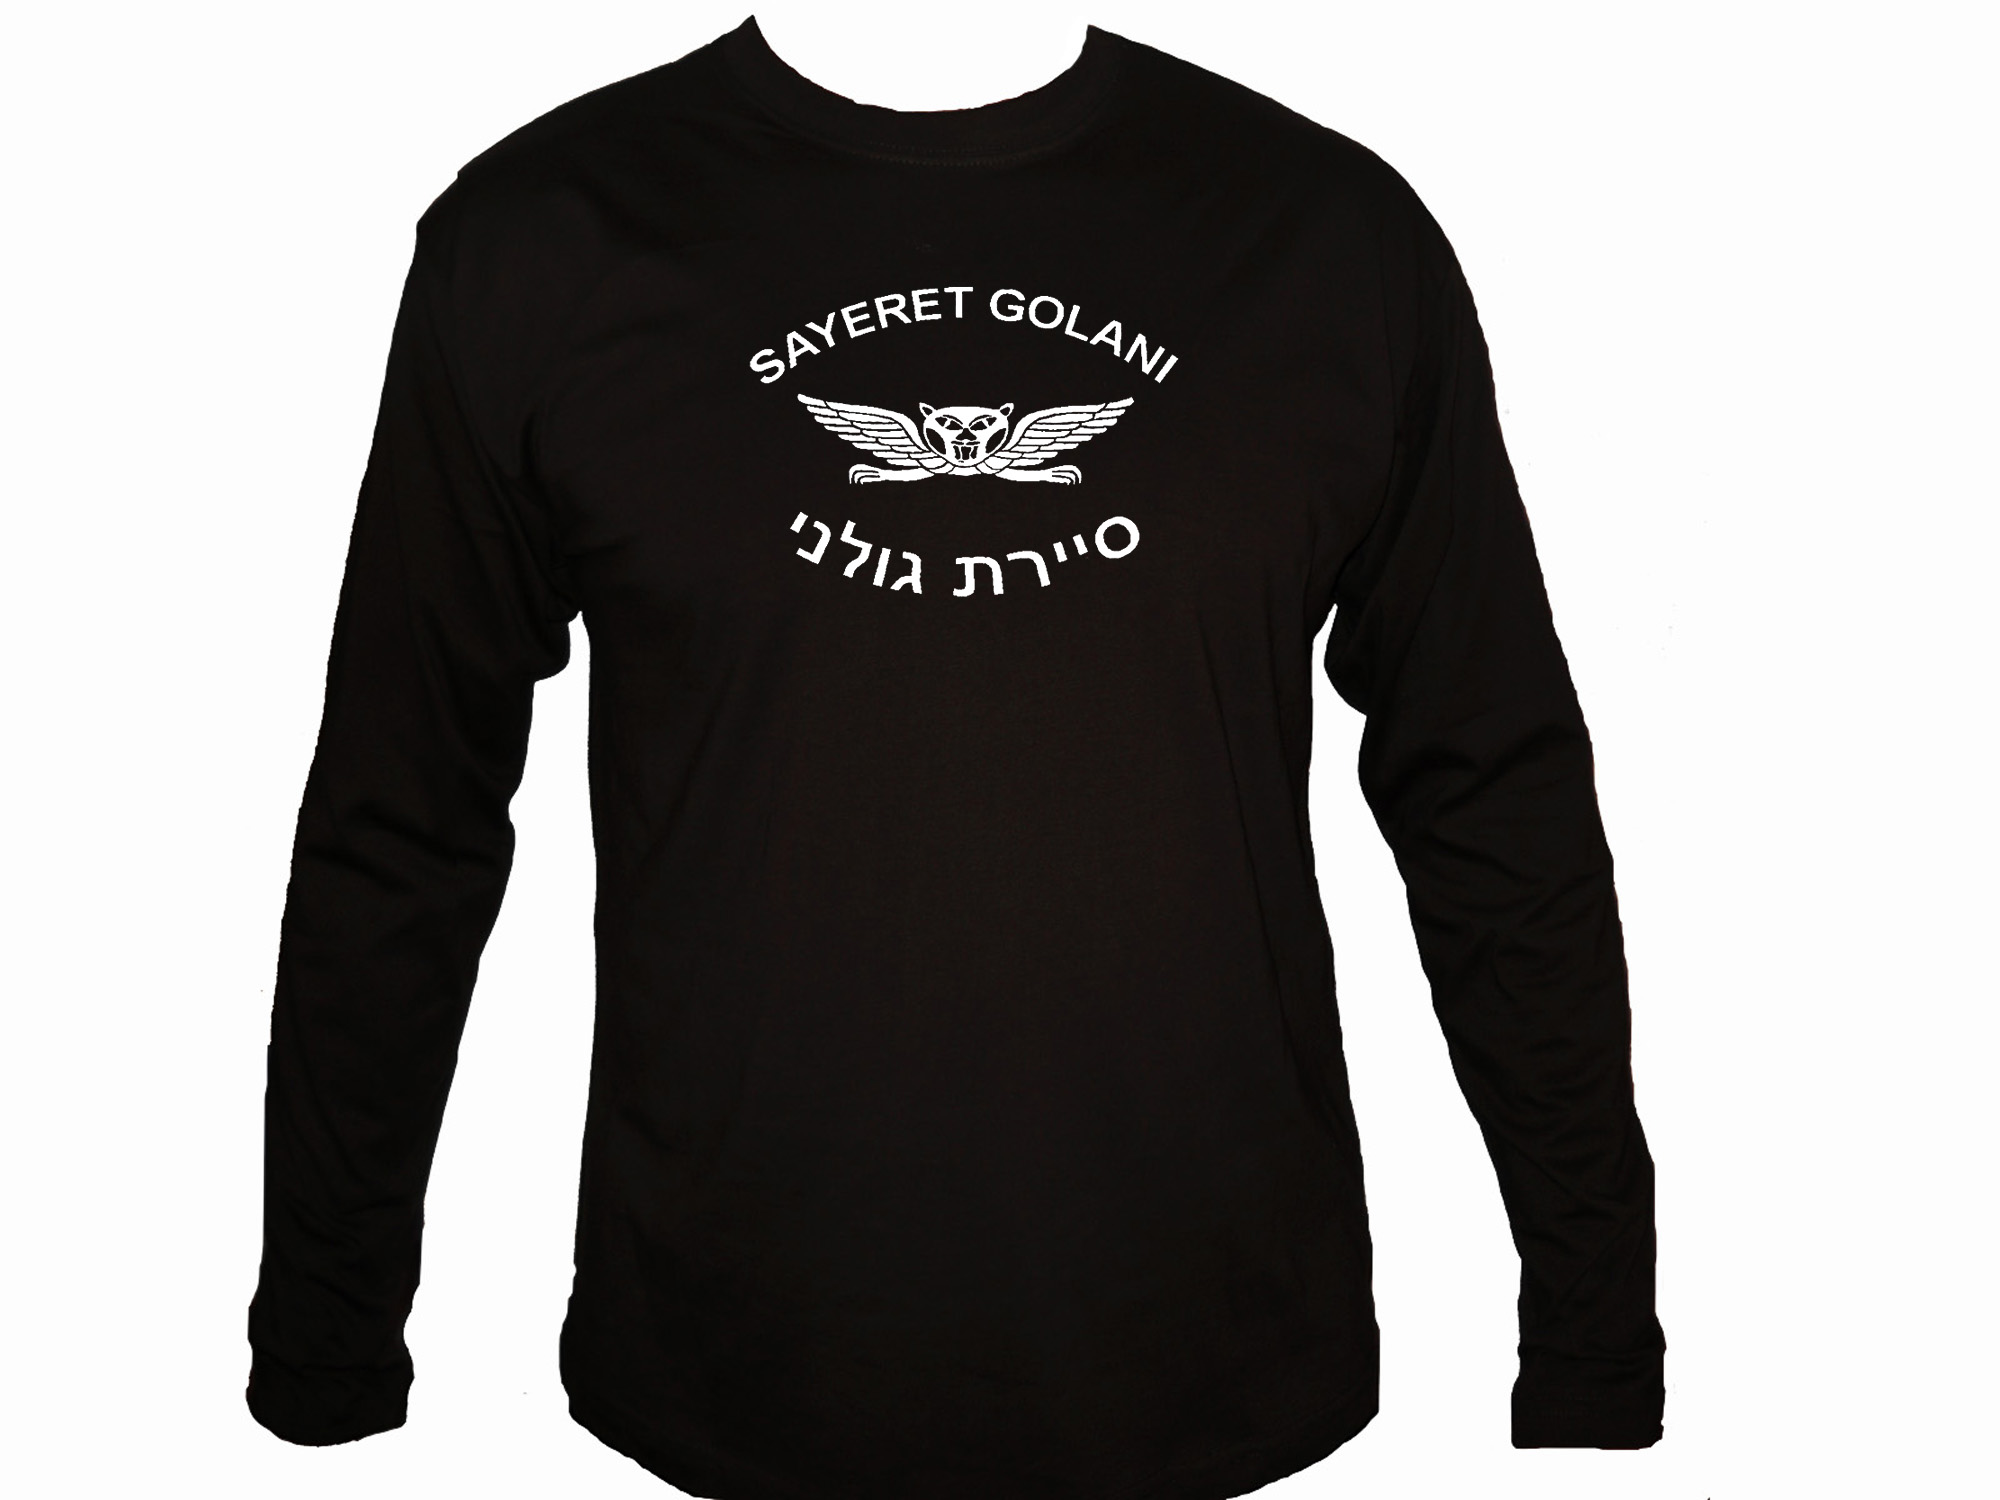 Sayeret Golani IDF Israel army special unit sleeved t-shirt